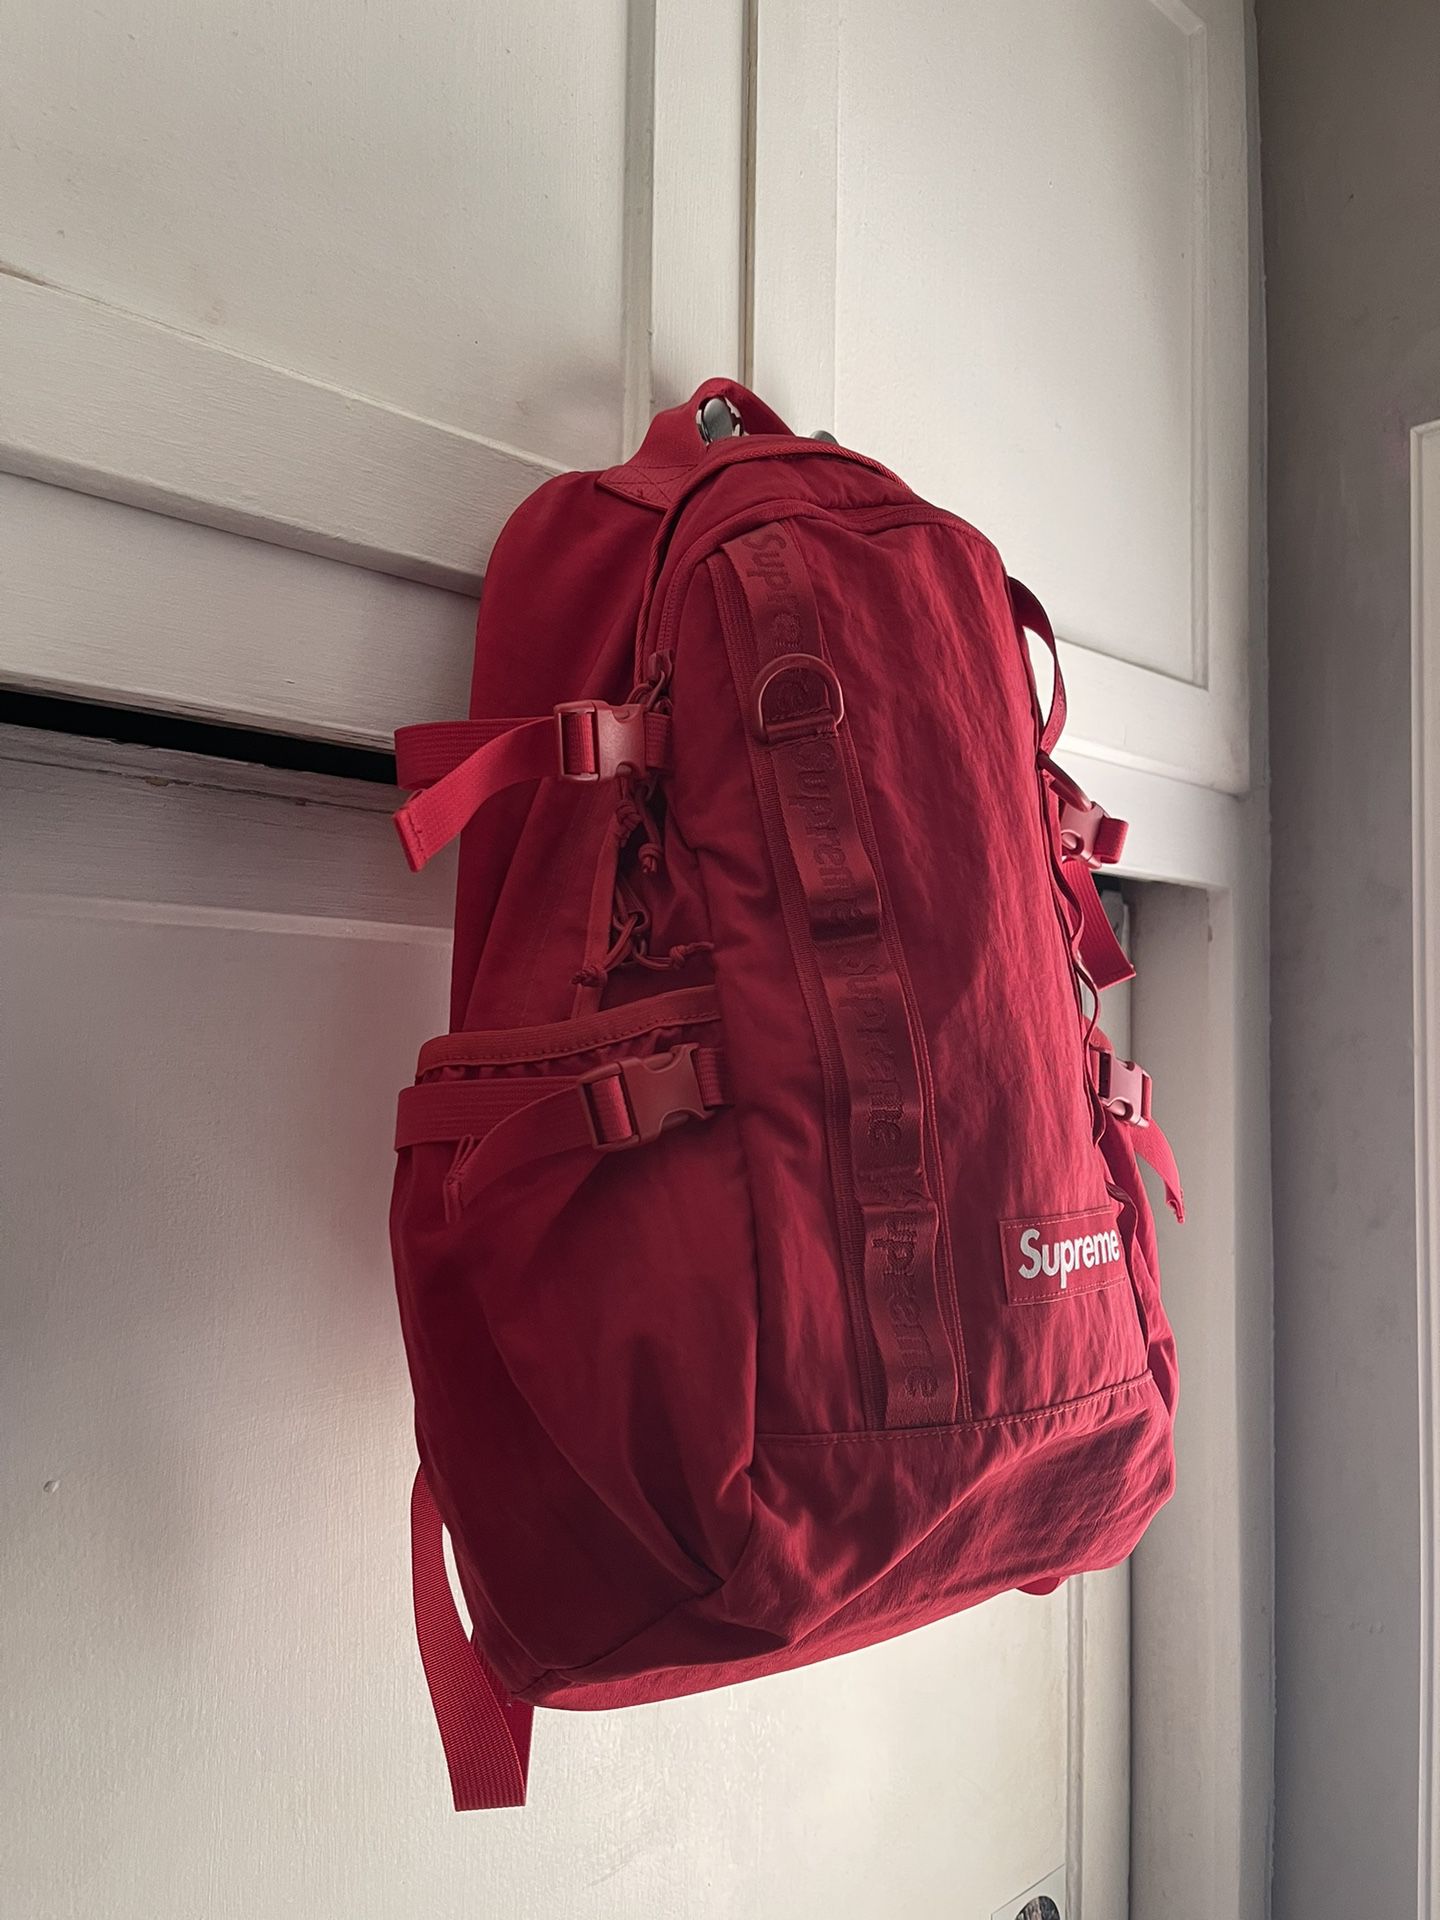 Supreme Backpack 'Dark Red